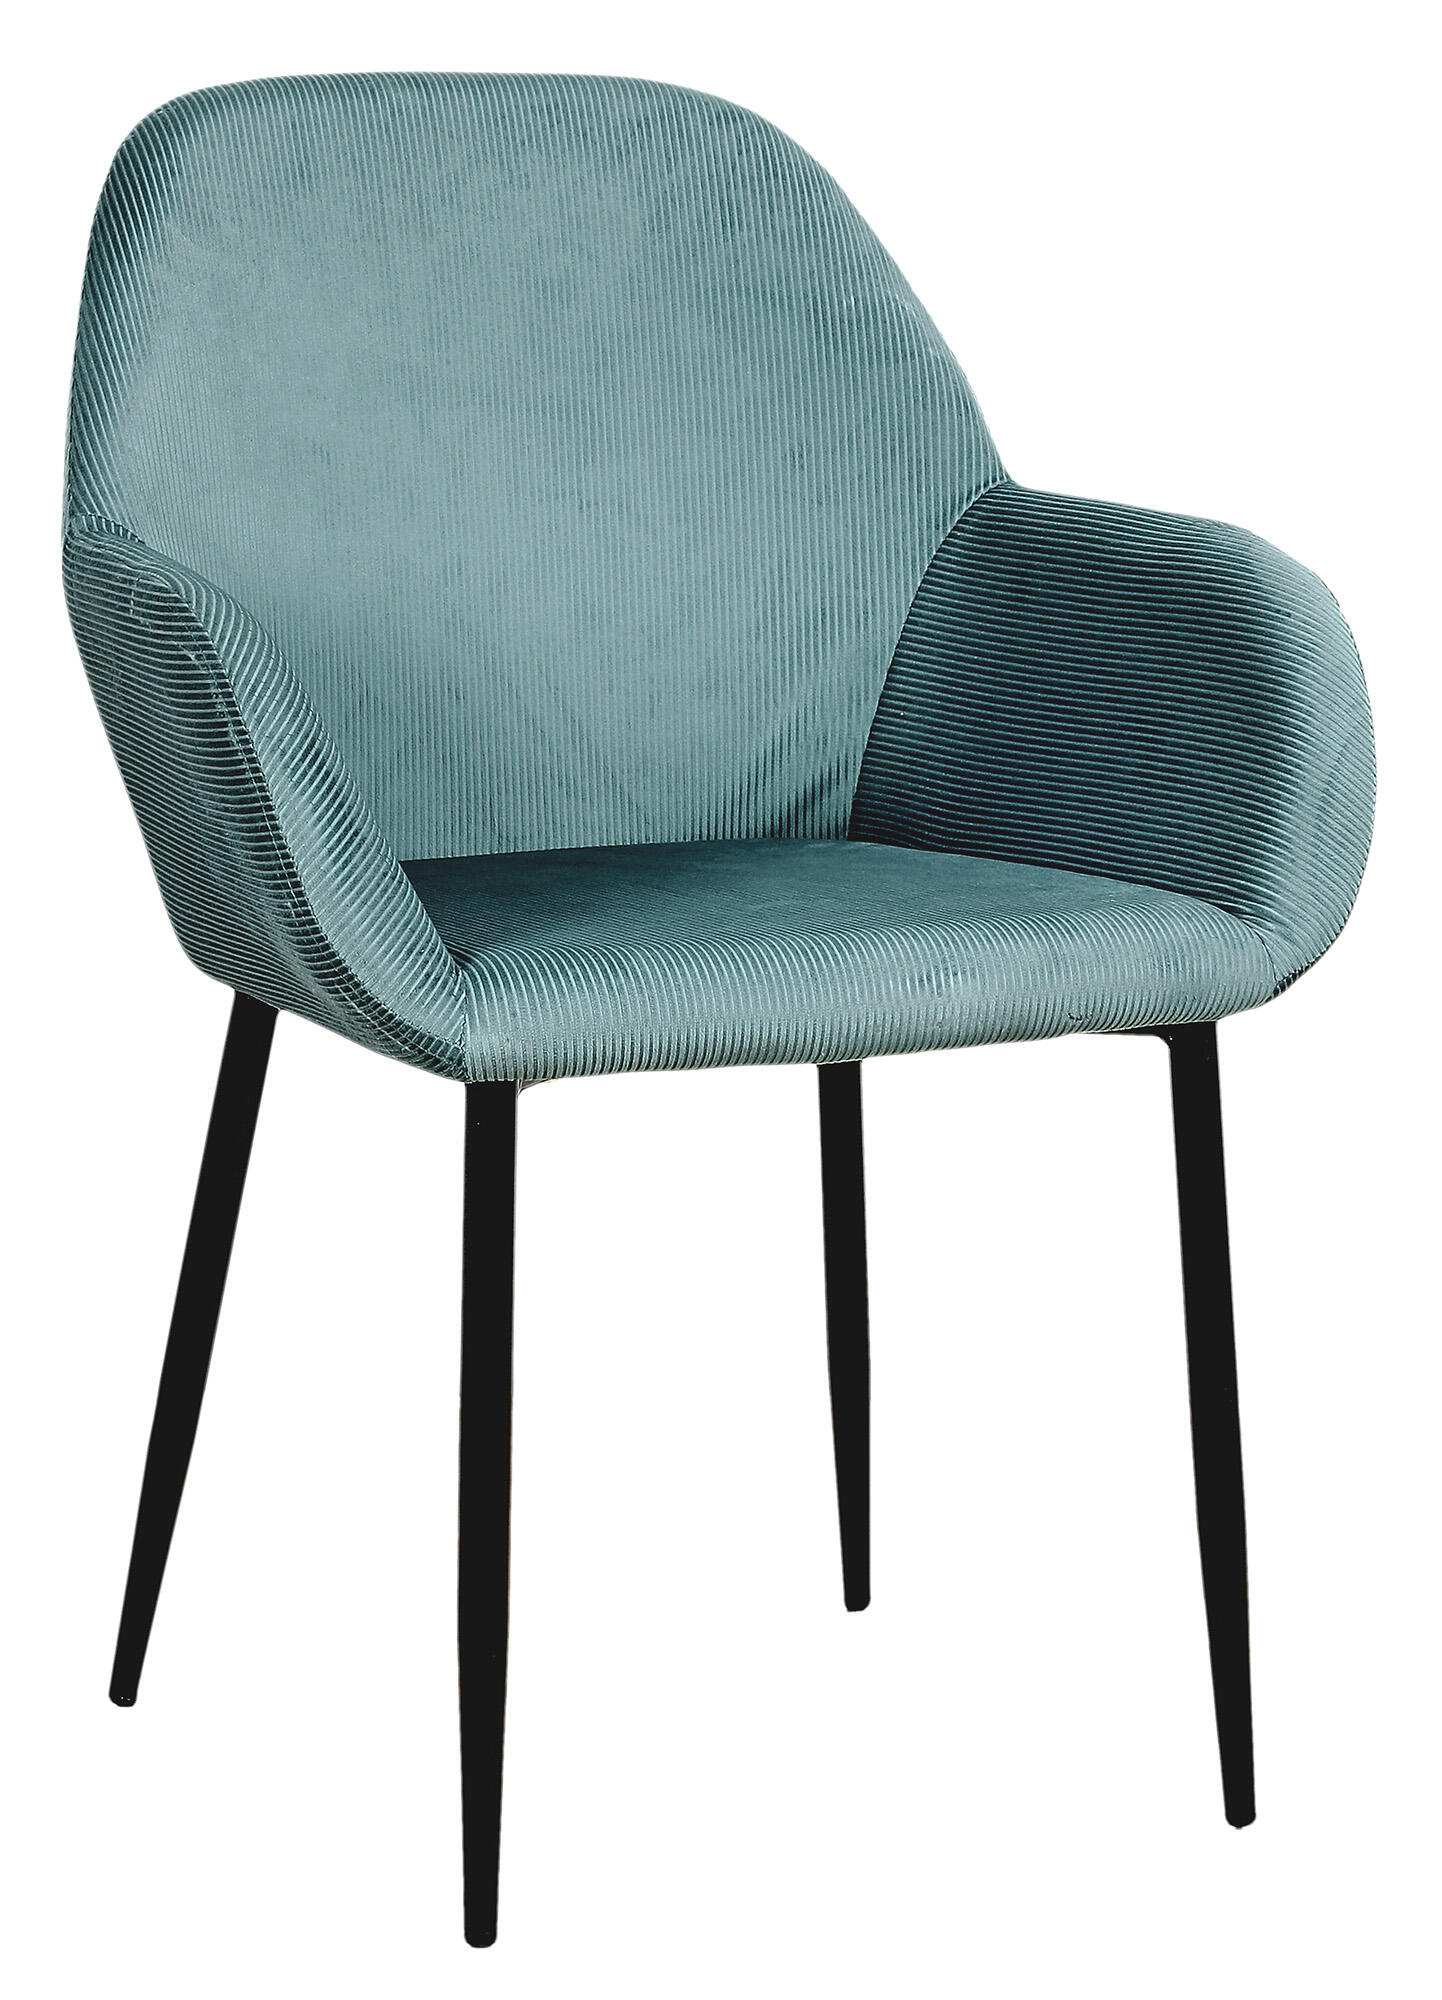 Set de 2 sillas de comedor giulia de madera color azul de 85x55,7x59cm